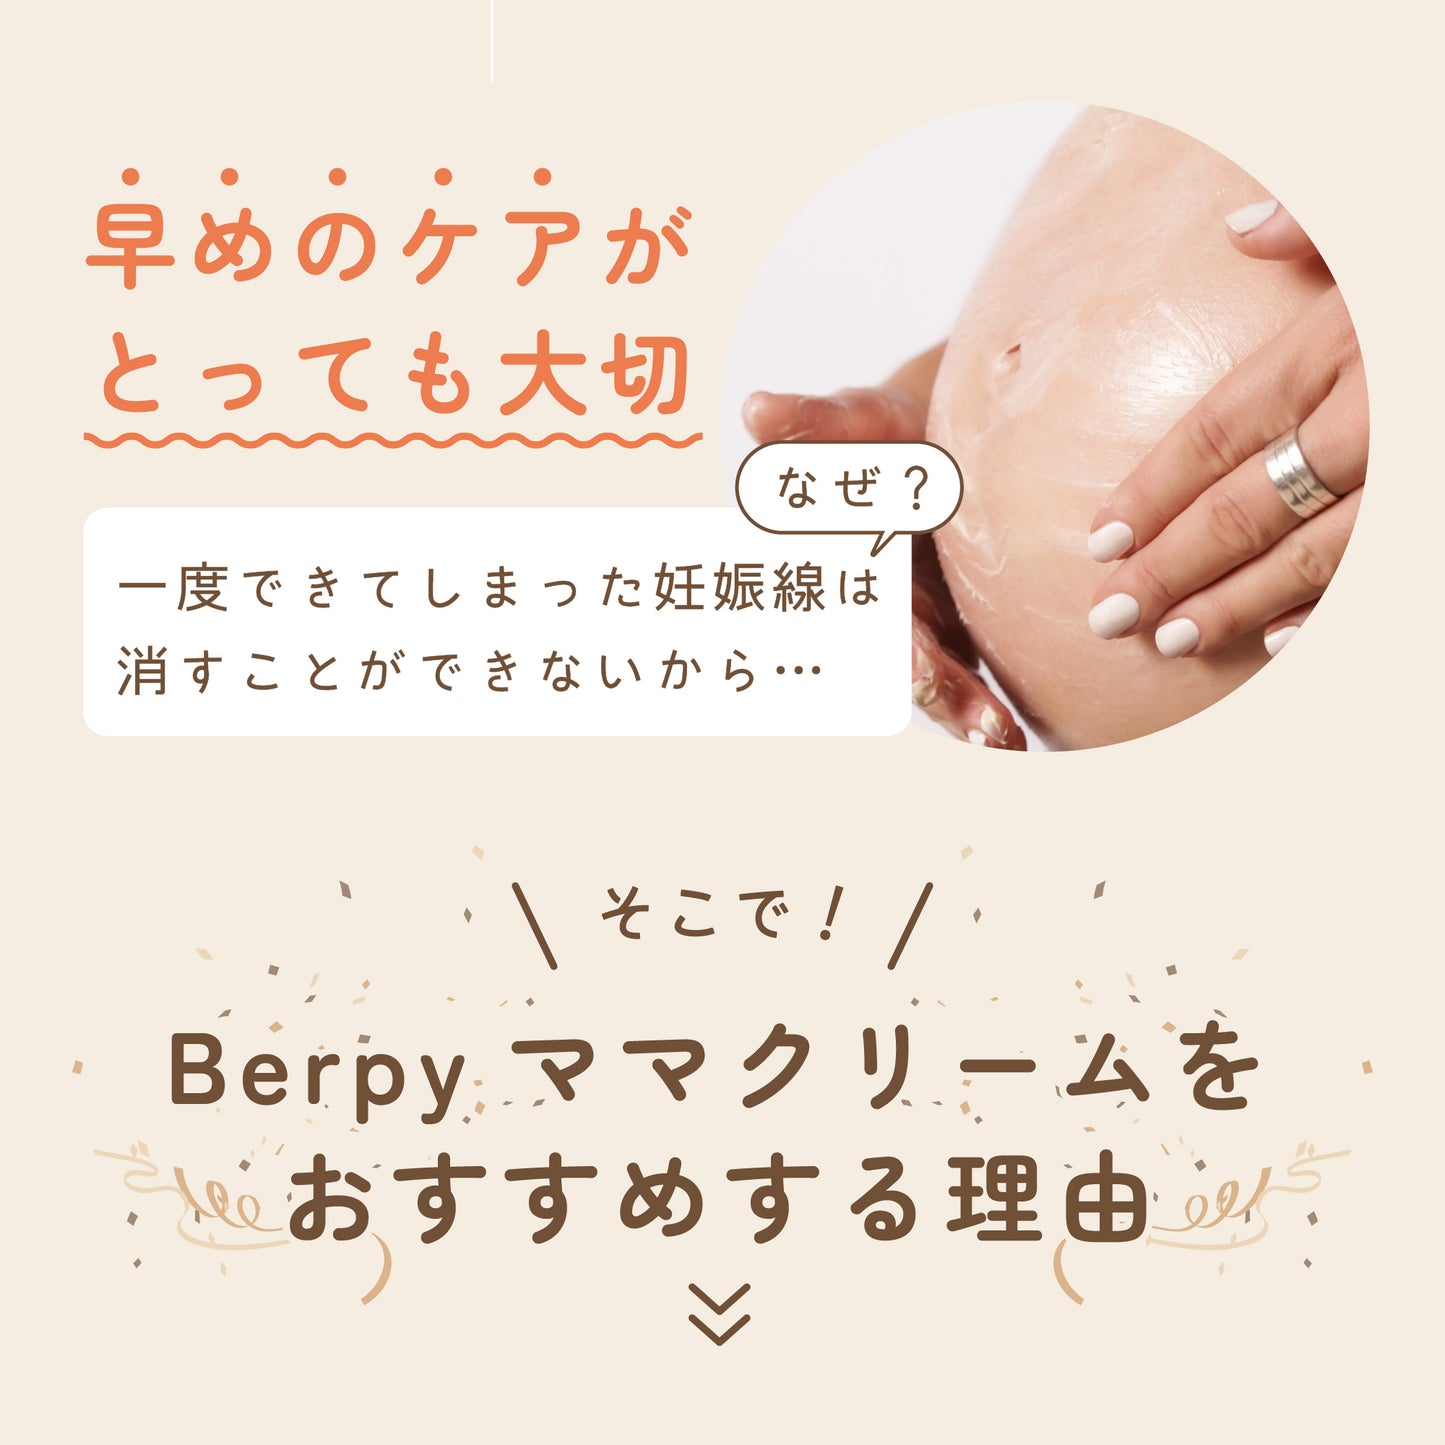 BERPY (バーピー) ナチュラルママクリーム 妊娠線 乾燥 予防 マタニティ 保湿 大容量 [3~4か月分] 300g